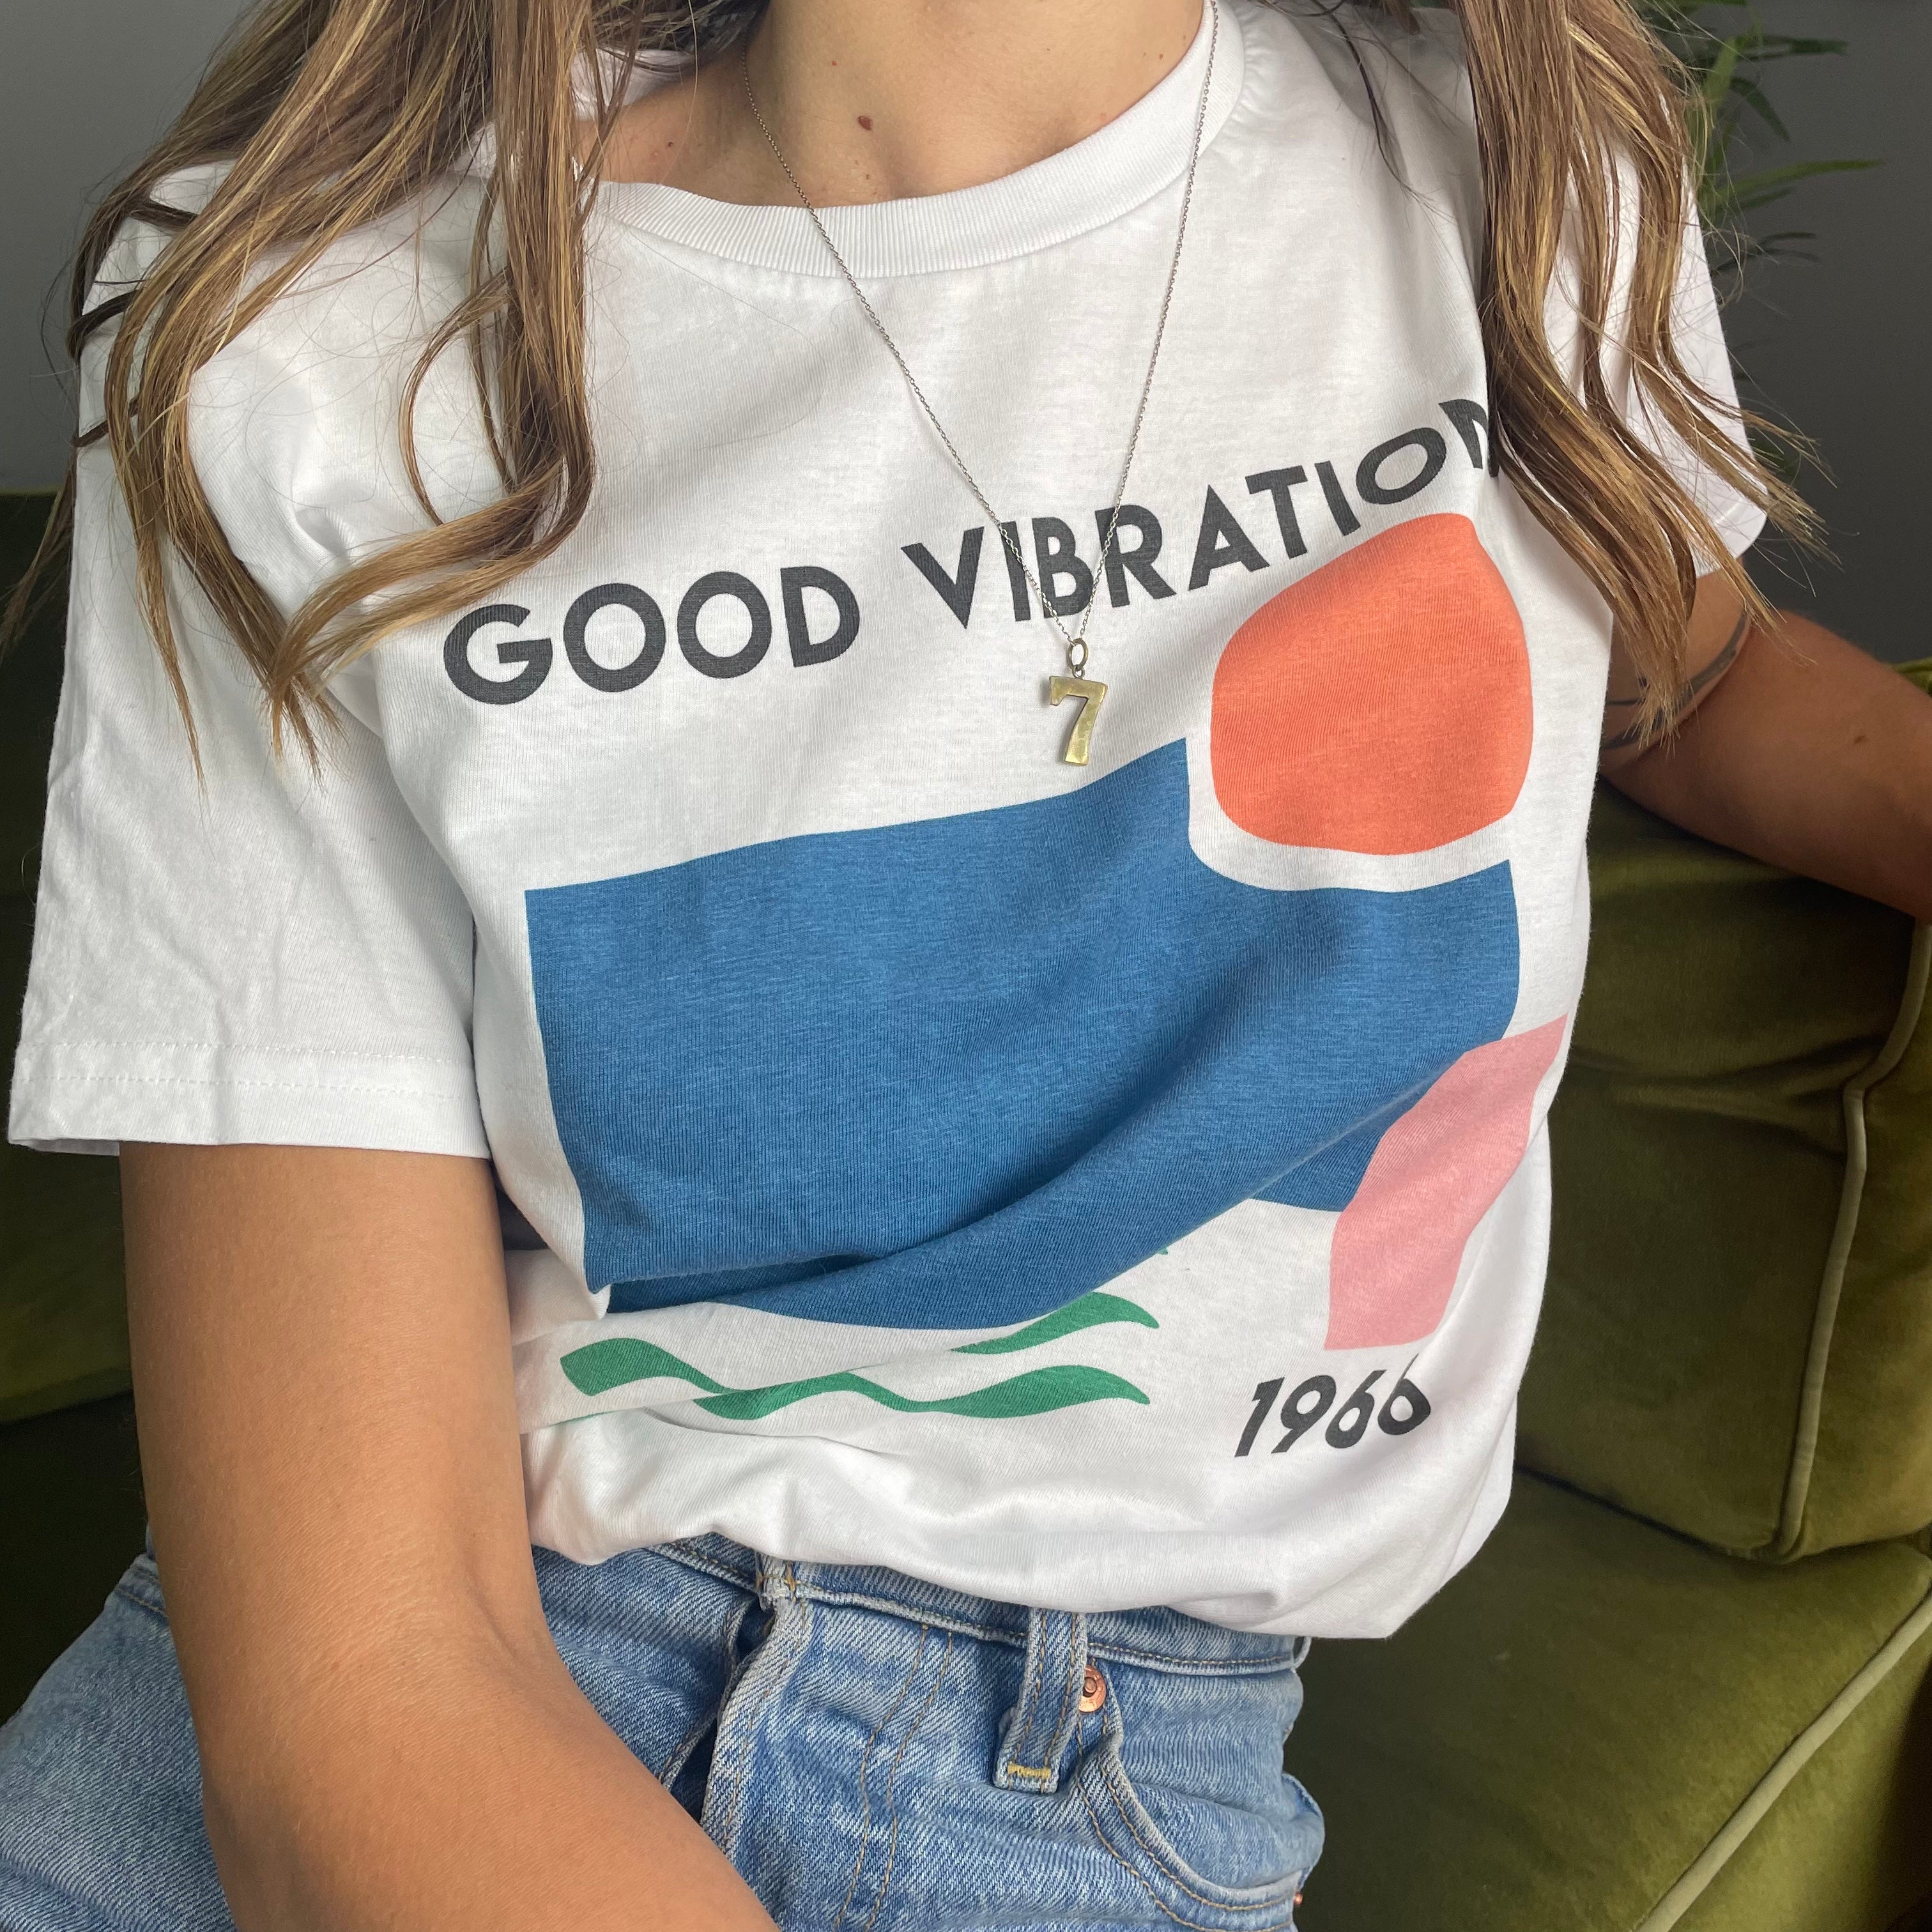 Good vibrations Oversized retro slogan t-shirt